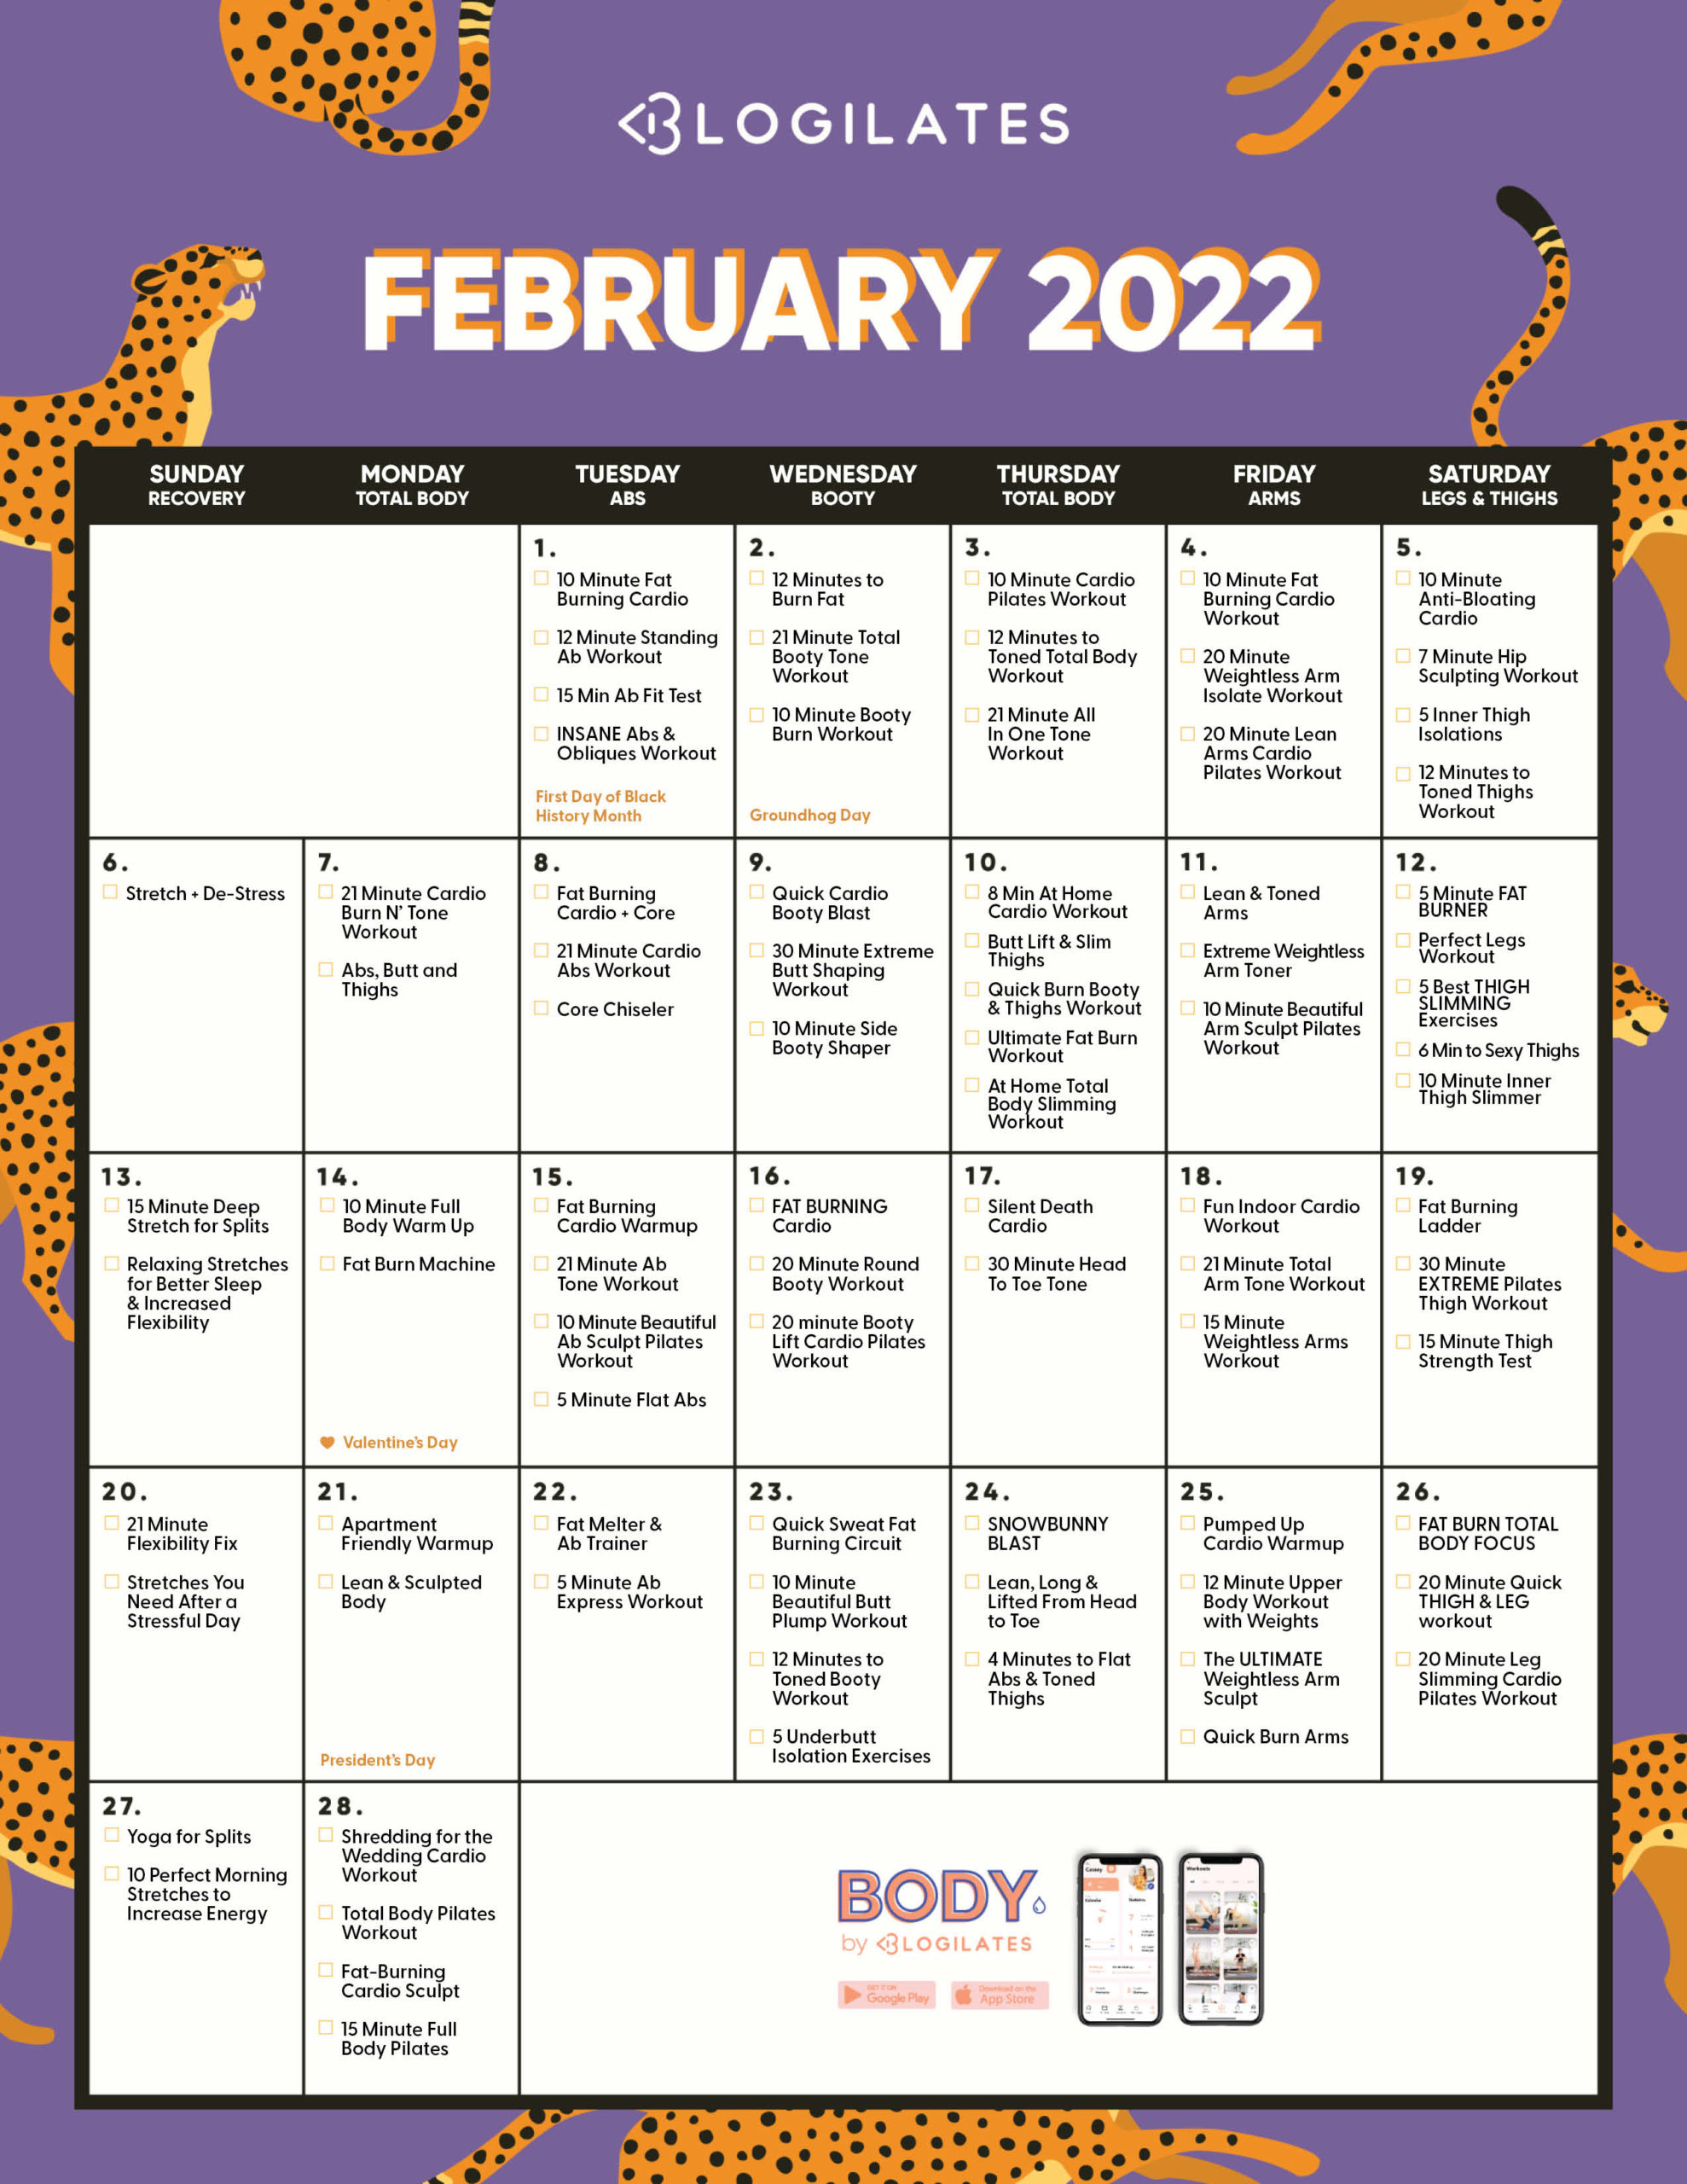 Free February 2022 Calendar The Blogilates February 2022 Workout Calendar! - Blogilates